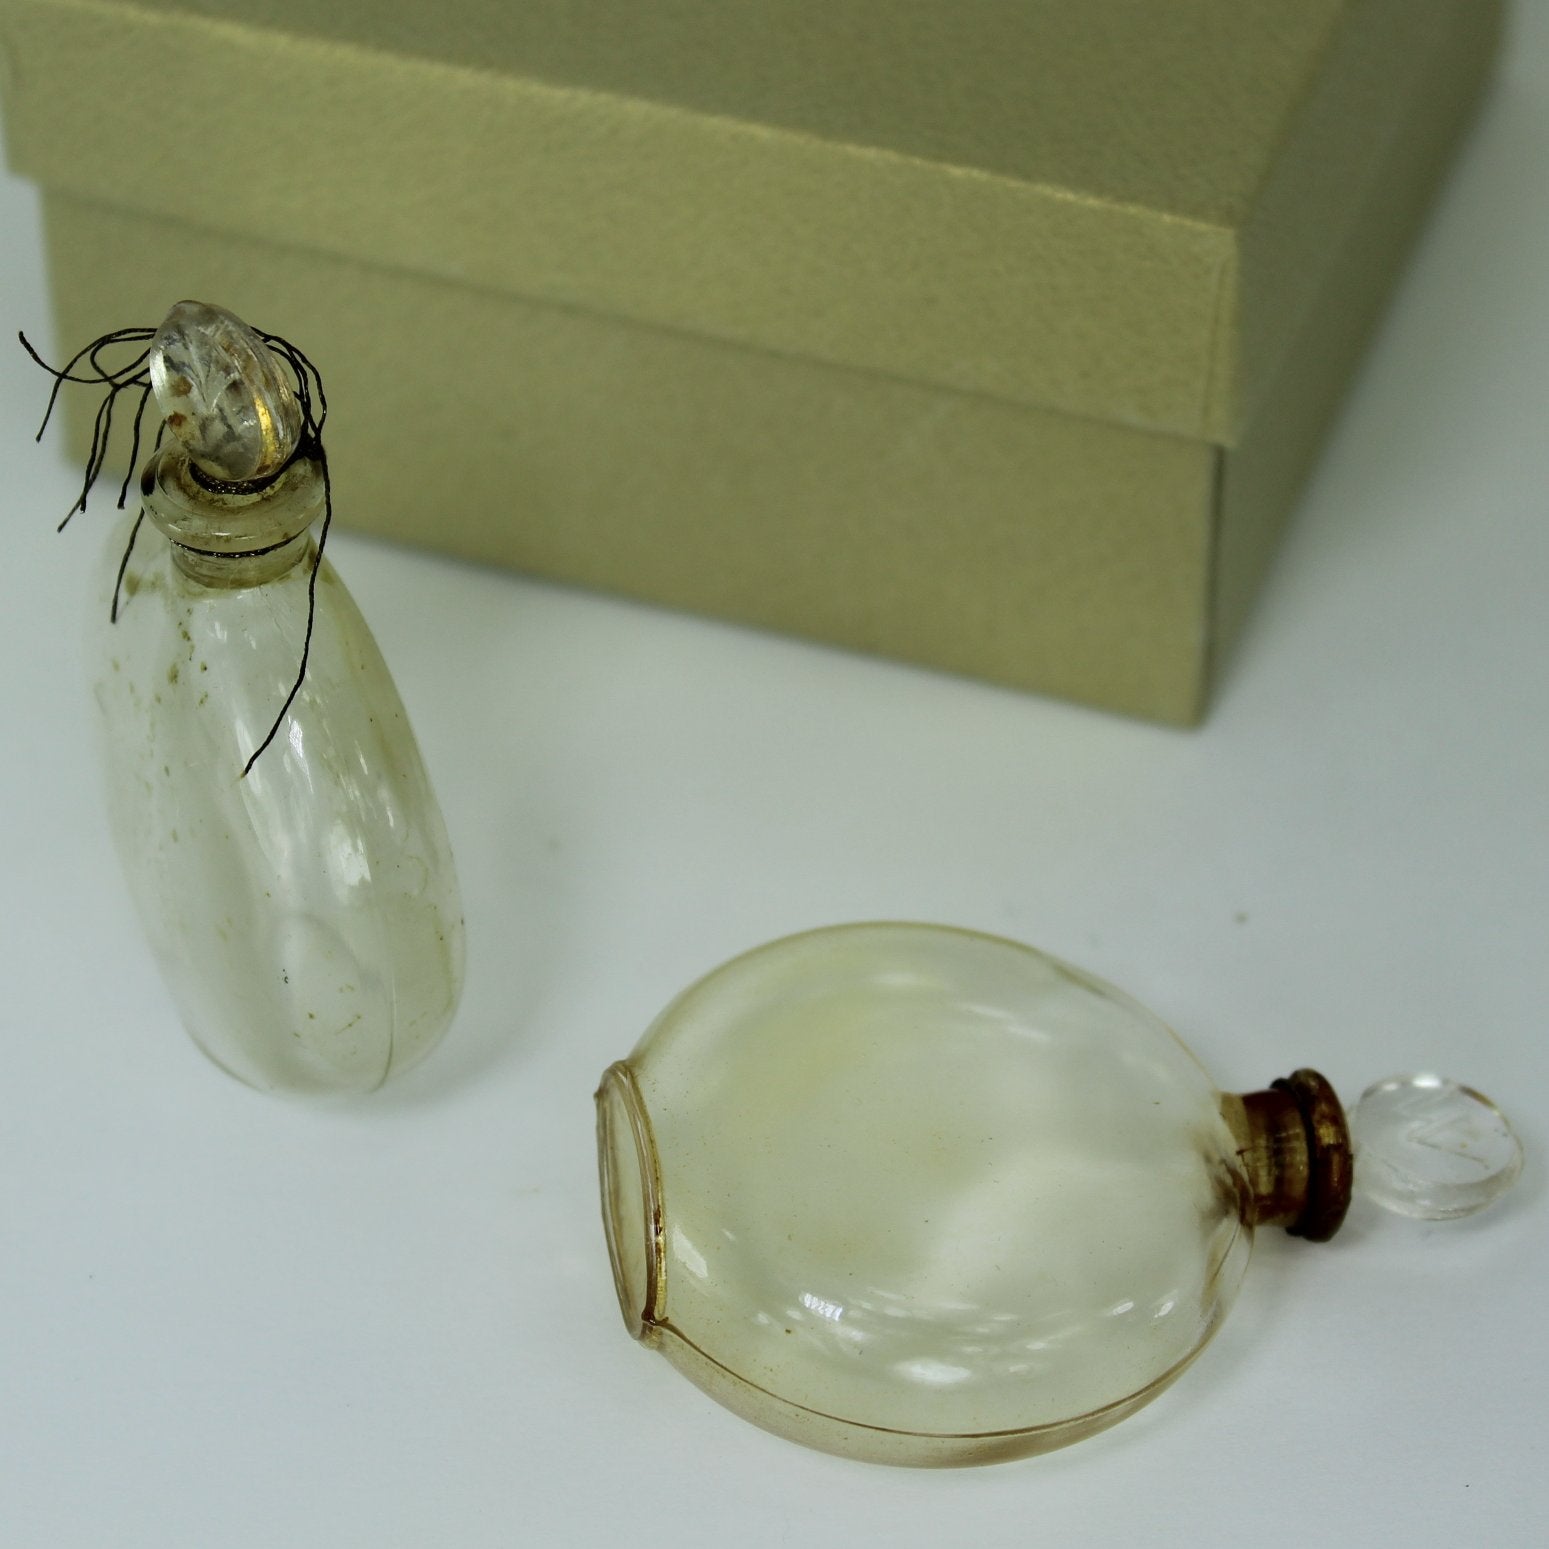 Worth Pair Perfume Bottles Miniatures 2 3/8" Vintage HP mark Pochet et du Courval vintage bottle with glass stopper